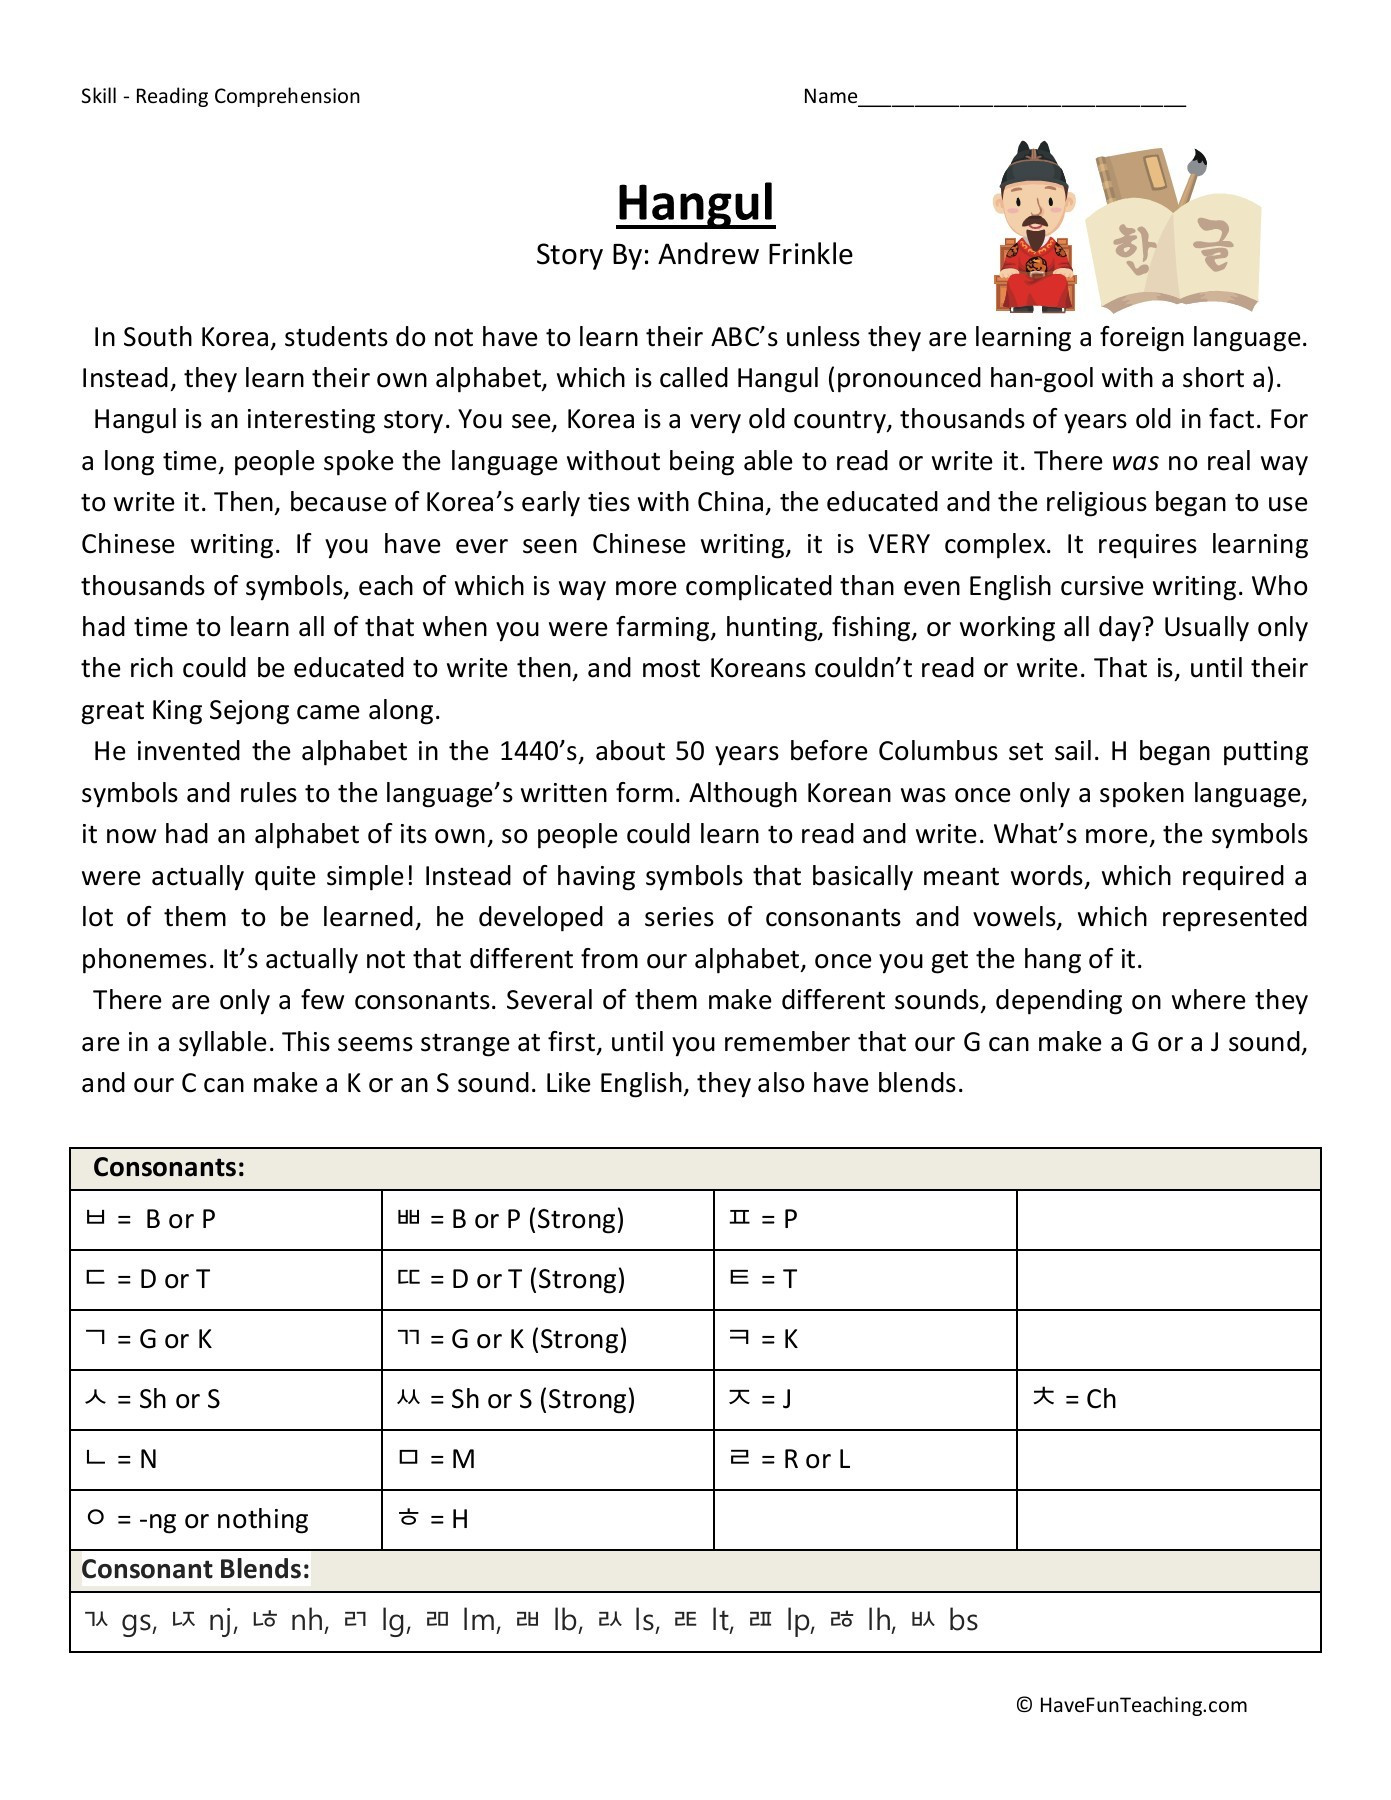 6th Grade Reading Worksheets Printable Hangul Sixth Grade Reading Prehension Worksheet Pages 1